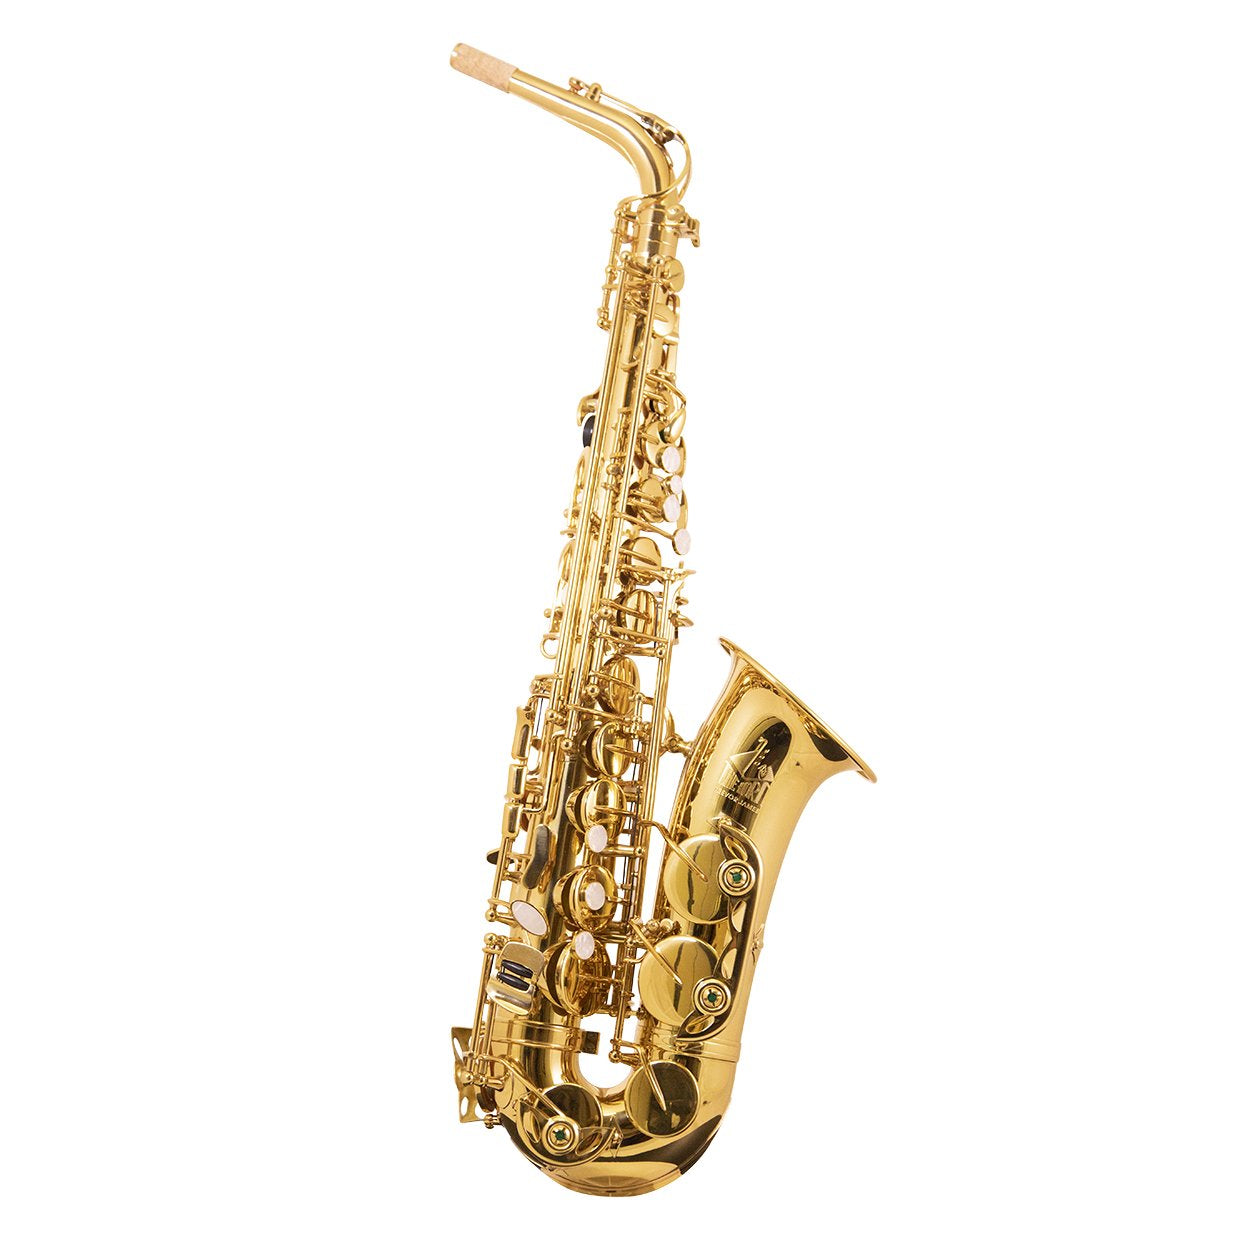 Trevor James - "The Horn" Alto Saxophone-Saxophone-Trevor James-Music Elements